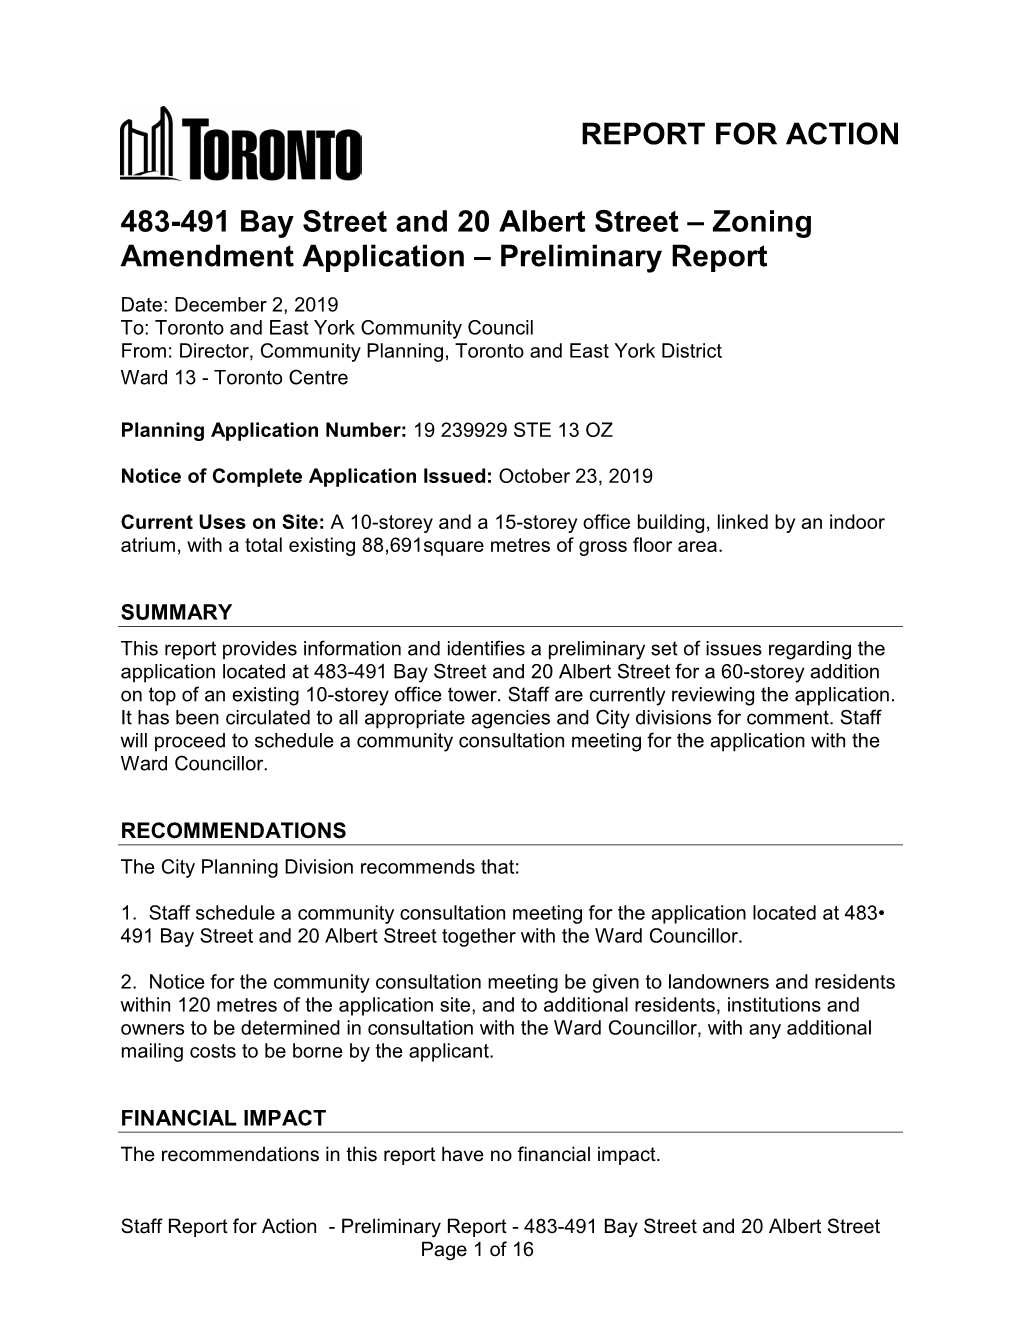 483-491 Bay Street and 20 Albert Street – Zoning Amendment Application – Preliminary Report